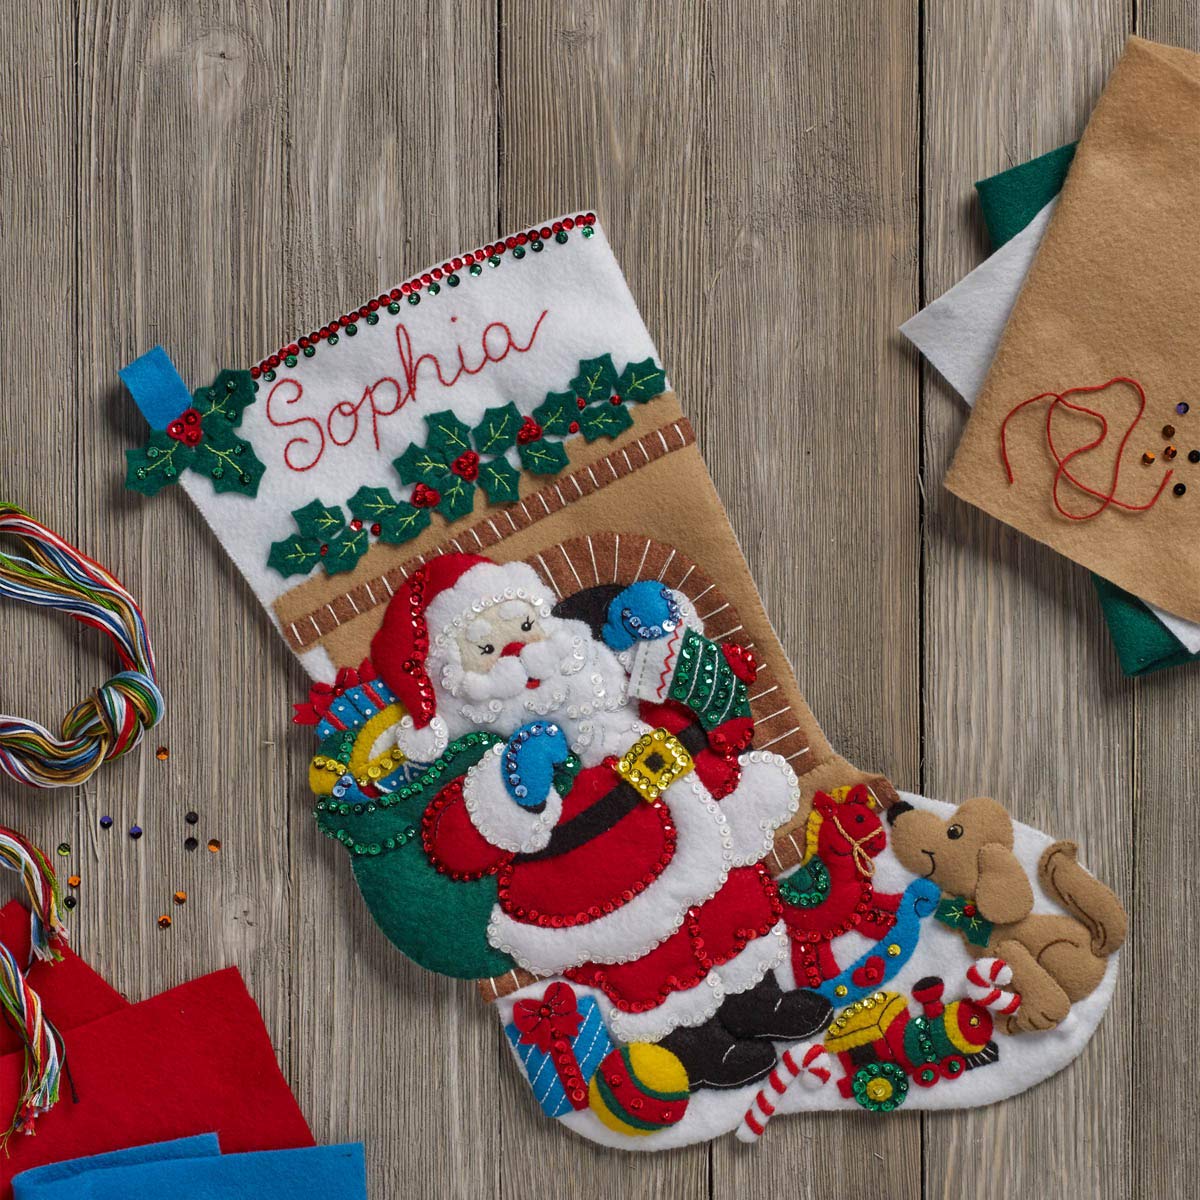 Bucilla Felt Applique Stocking Kit Santa's Visit, Size 18-Inch